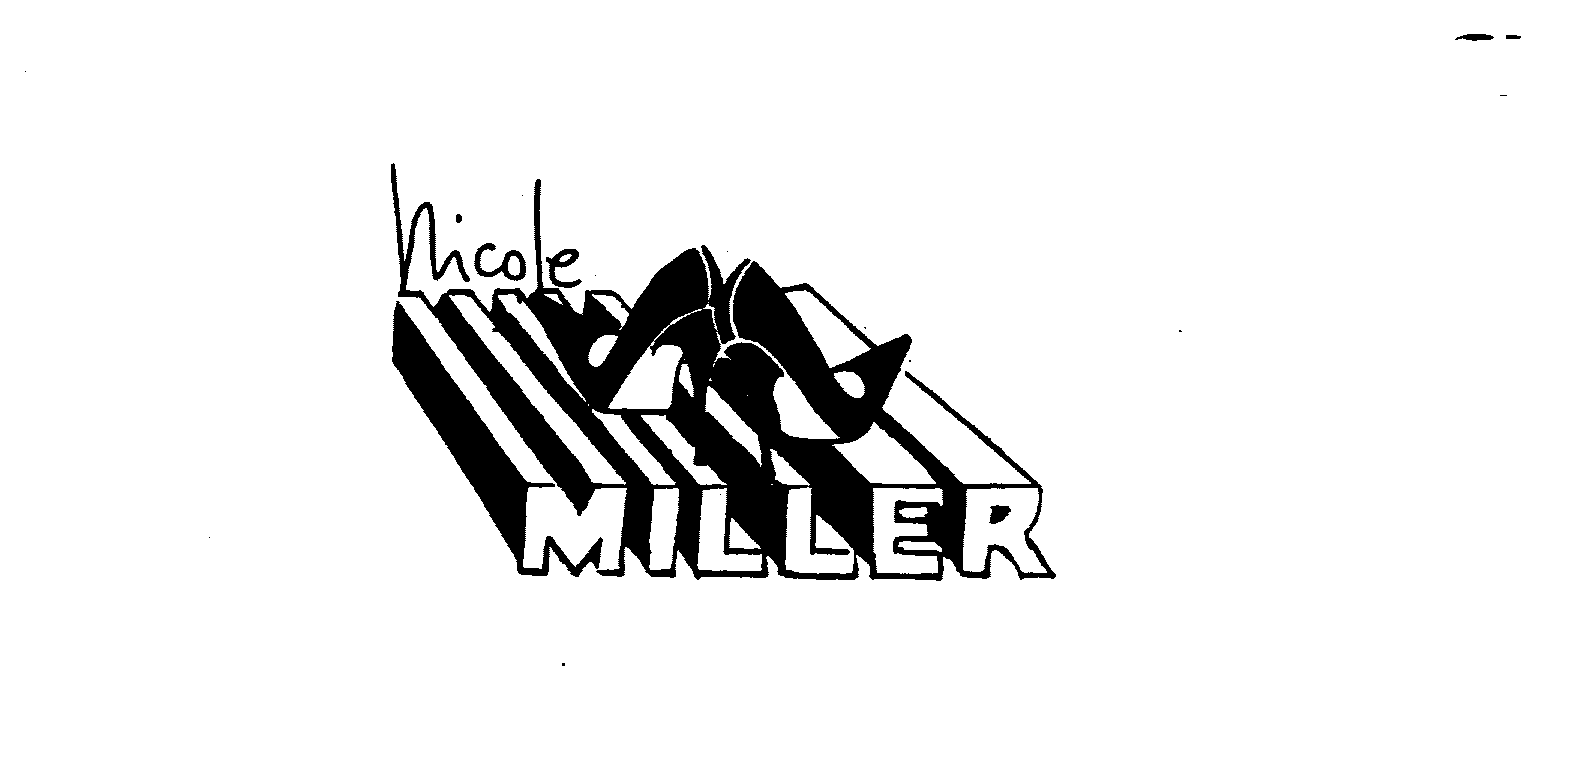 Trademark Logo NICOLE MILLER